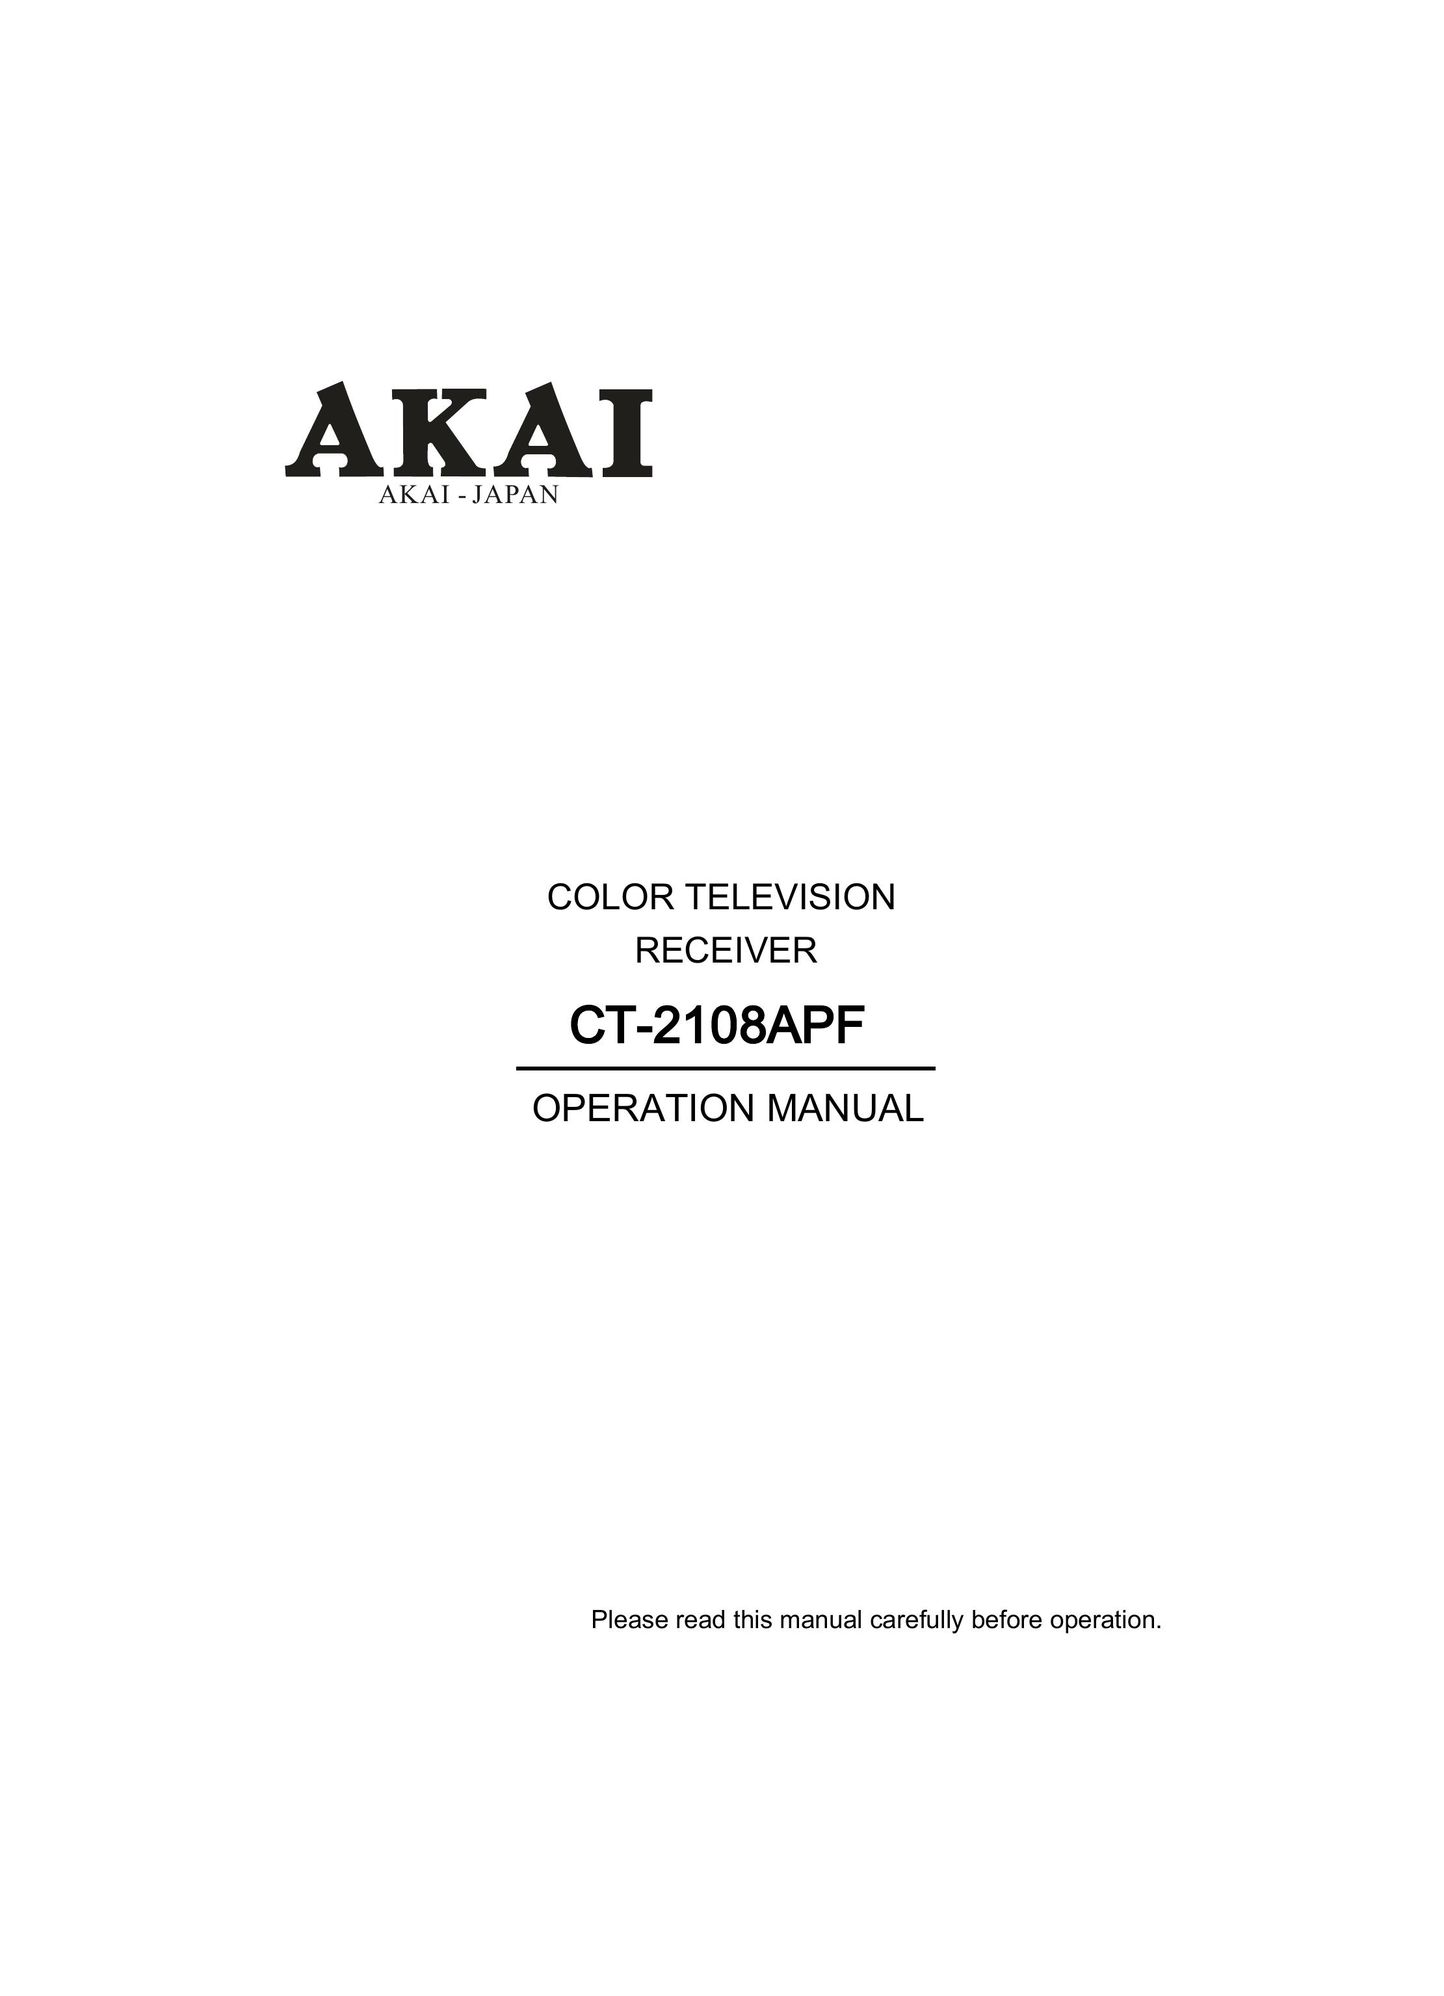 Akai CT-2108APF CRT Television User Manual